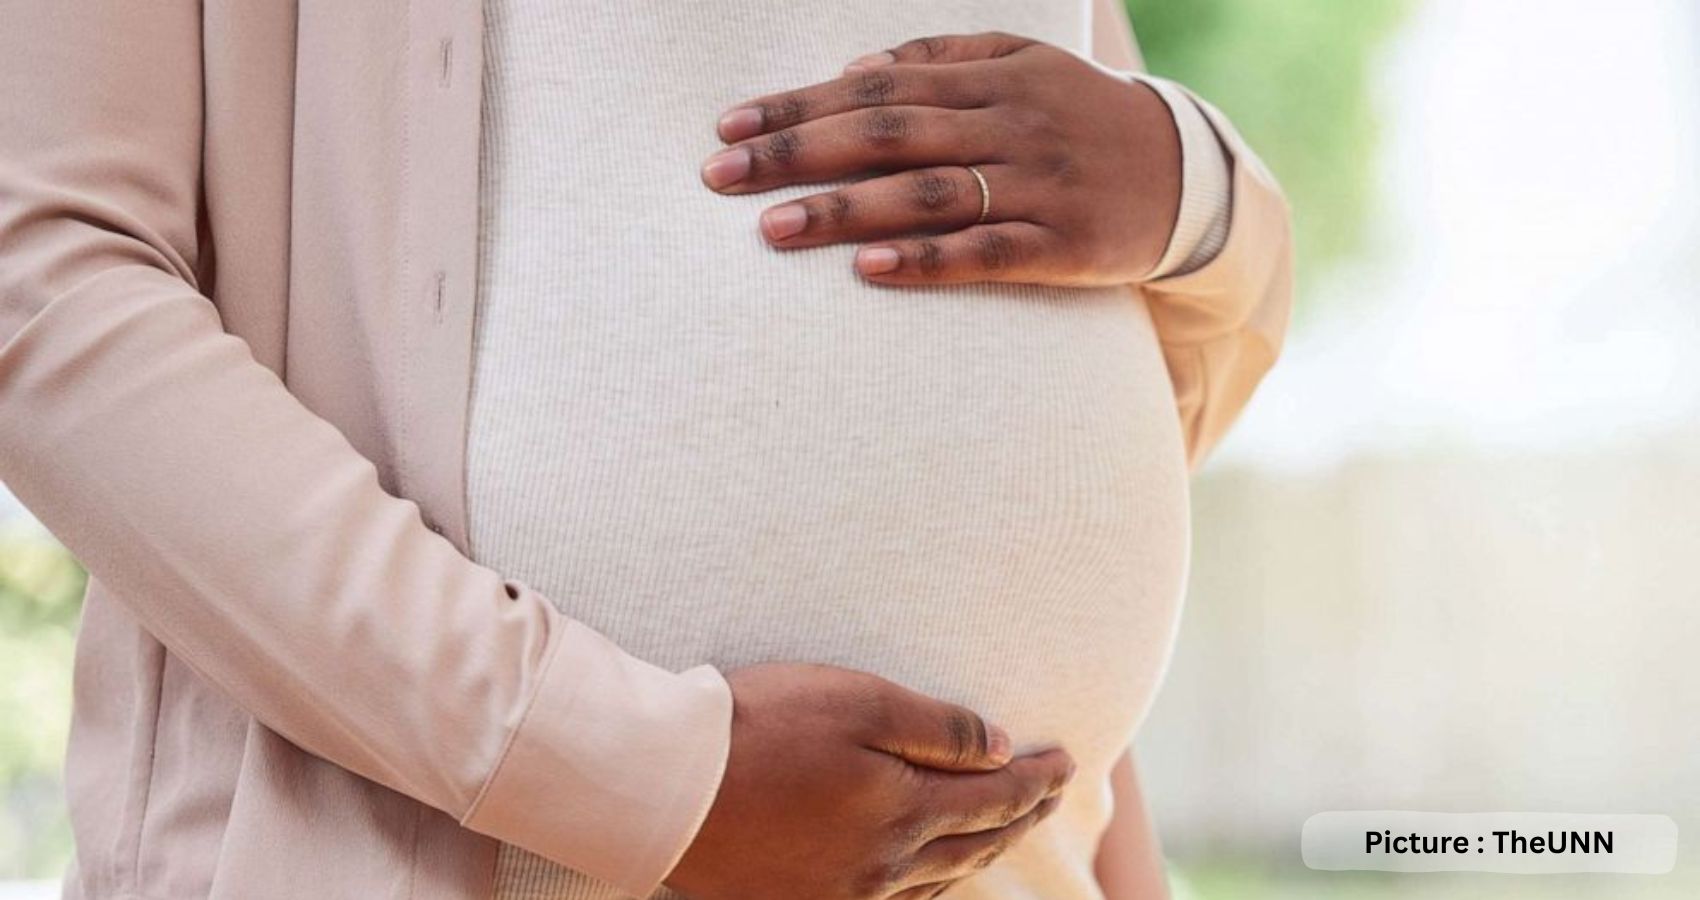 Pregnancy Kills 1 Woman Every 2 Minutes